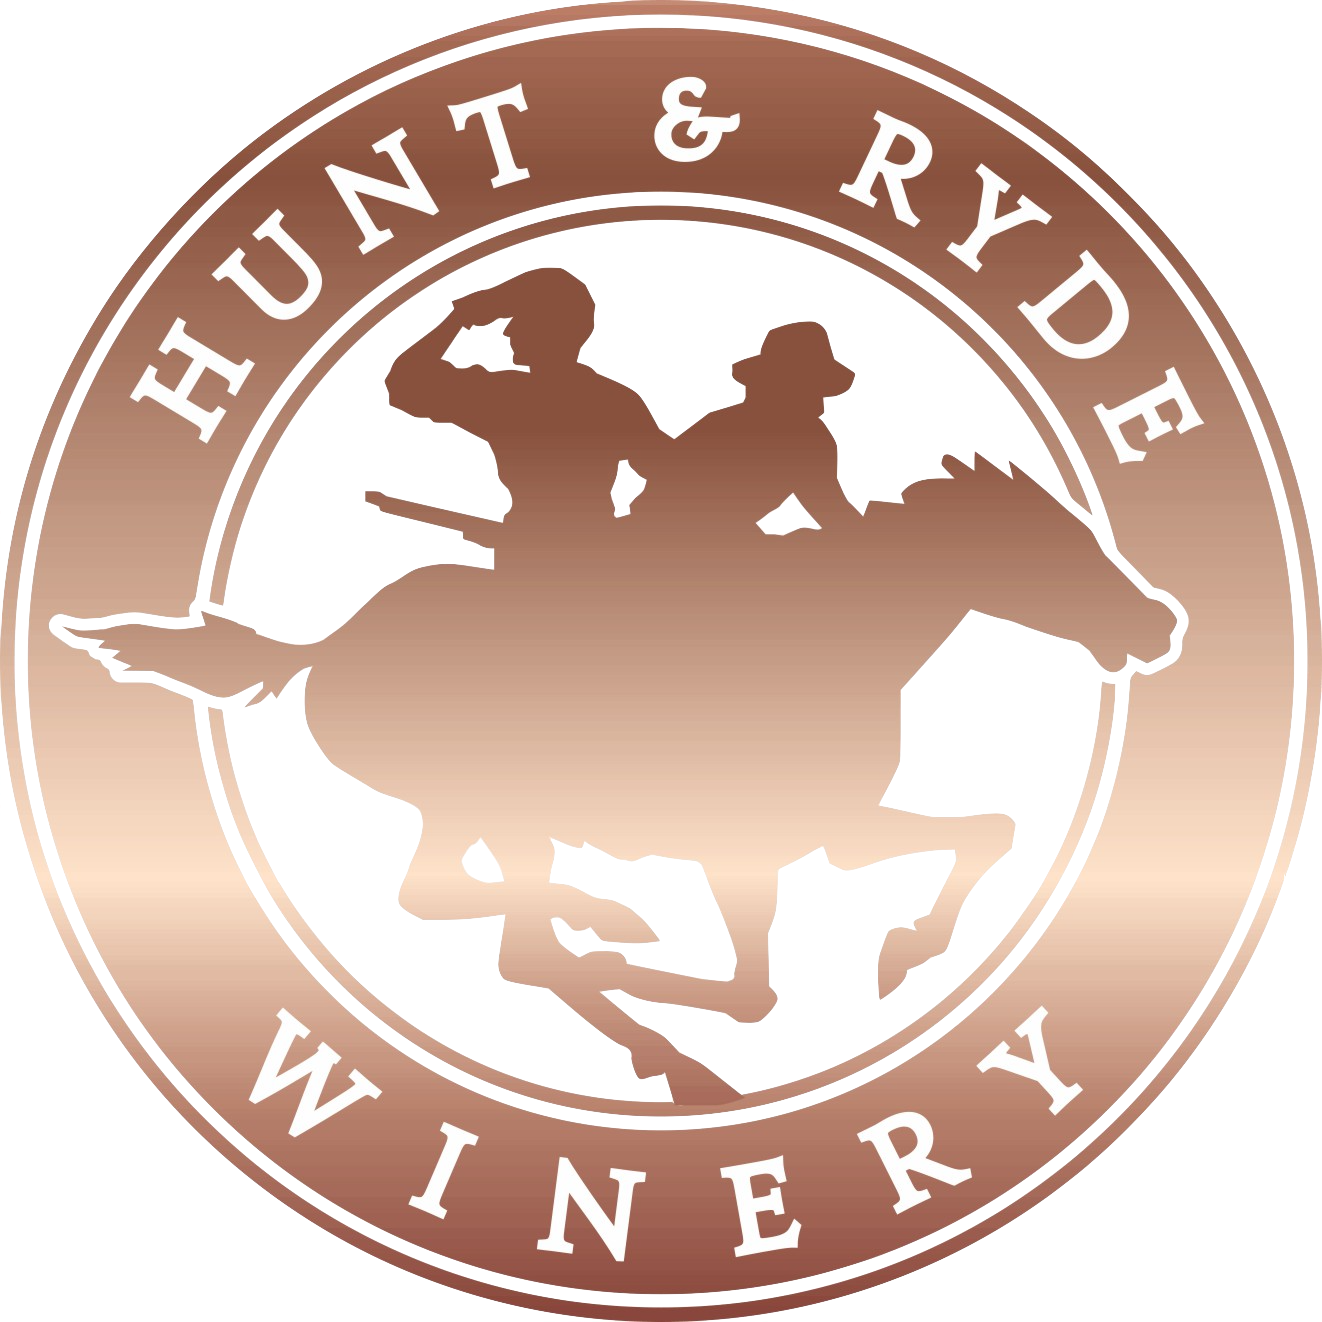 Hunt & Ryde Winery